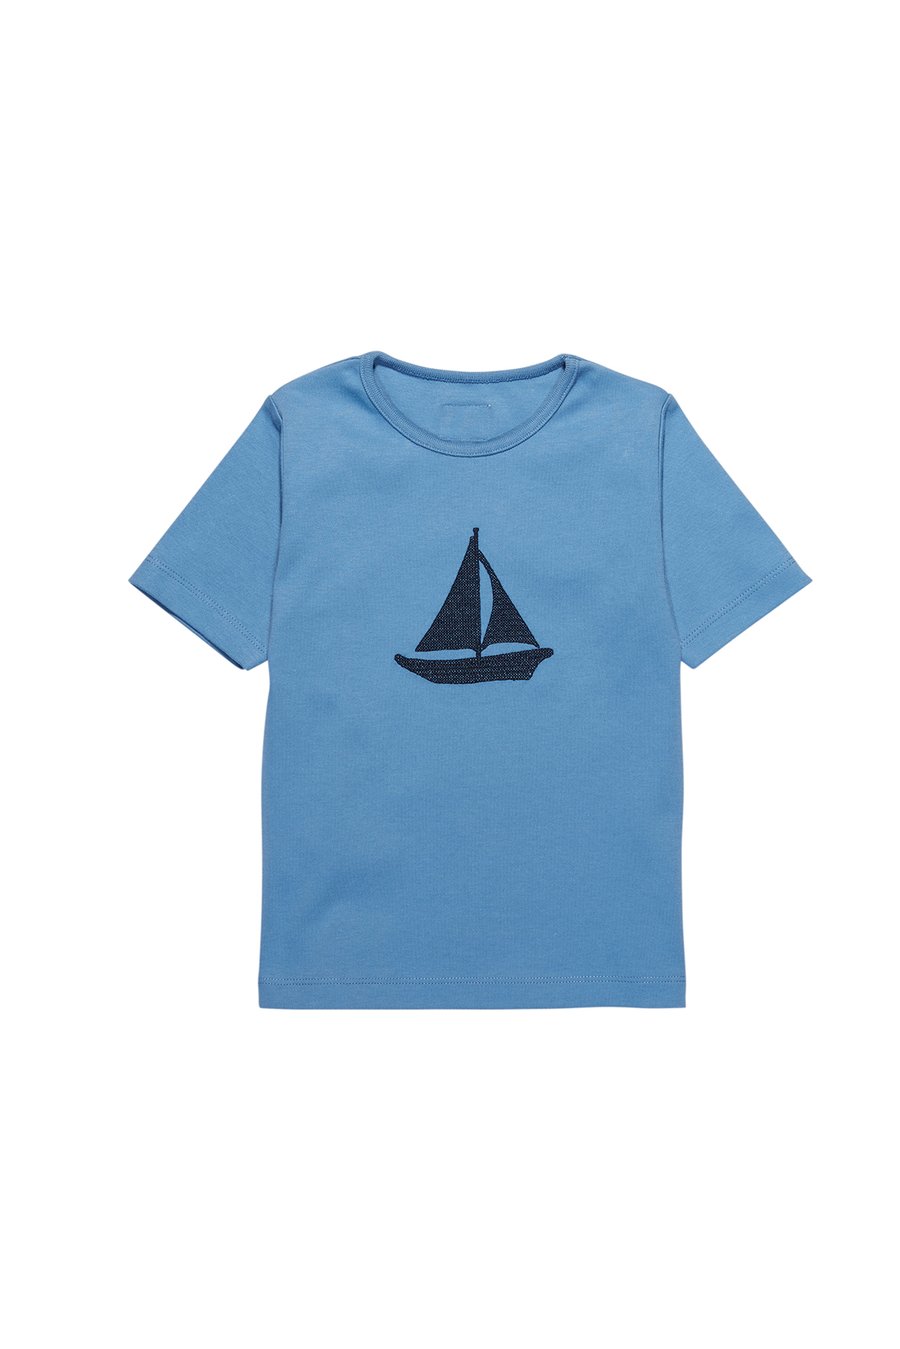 Image of T-Shirt in dunkelblau mit gesticktem Segelboot Art.315284 (C)